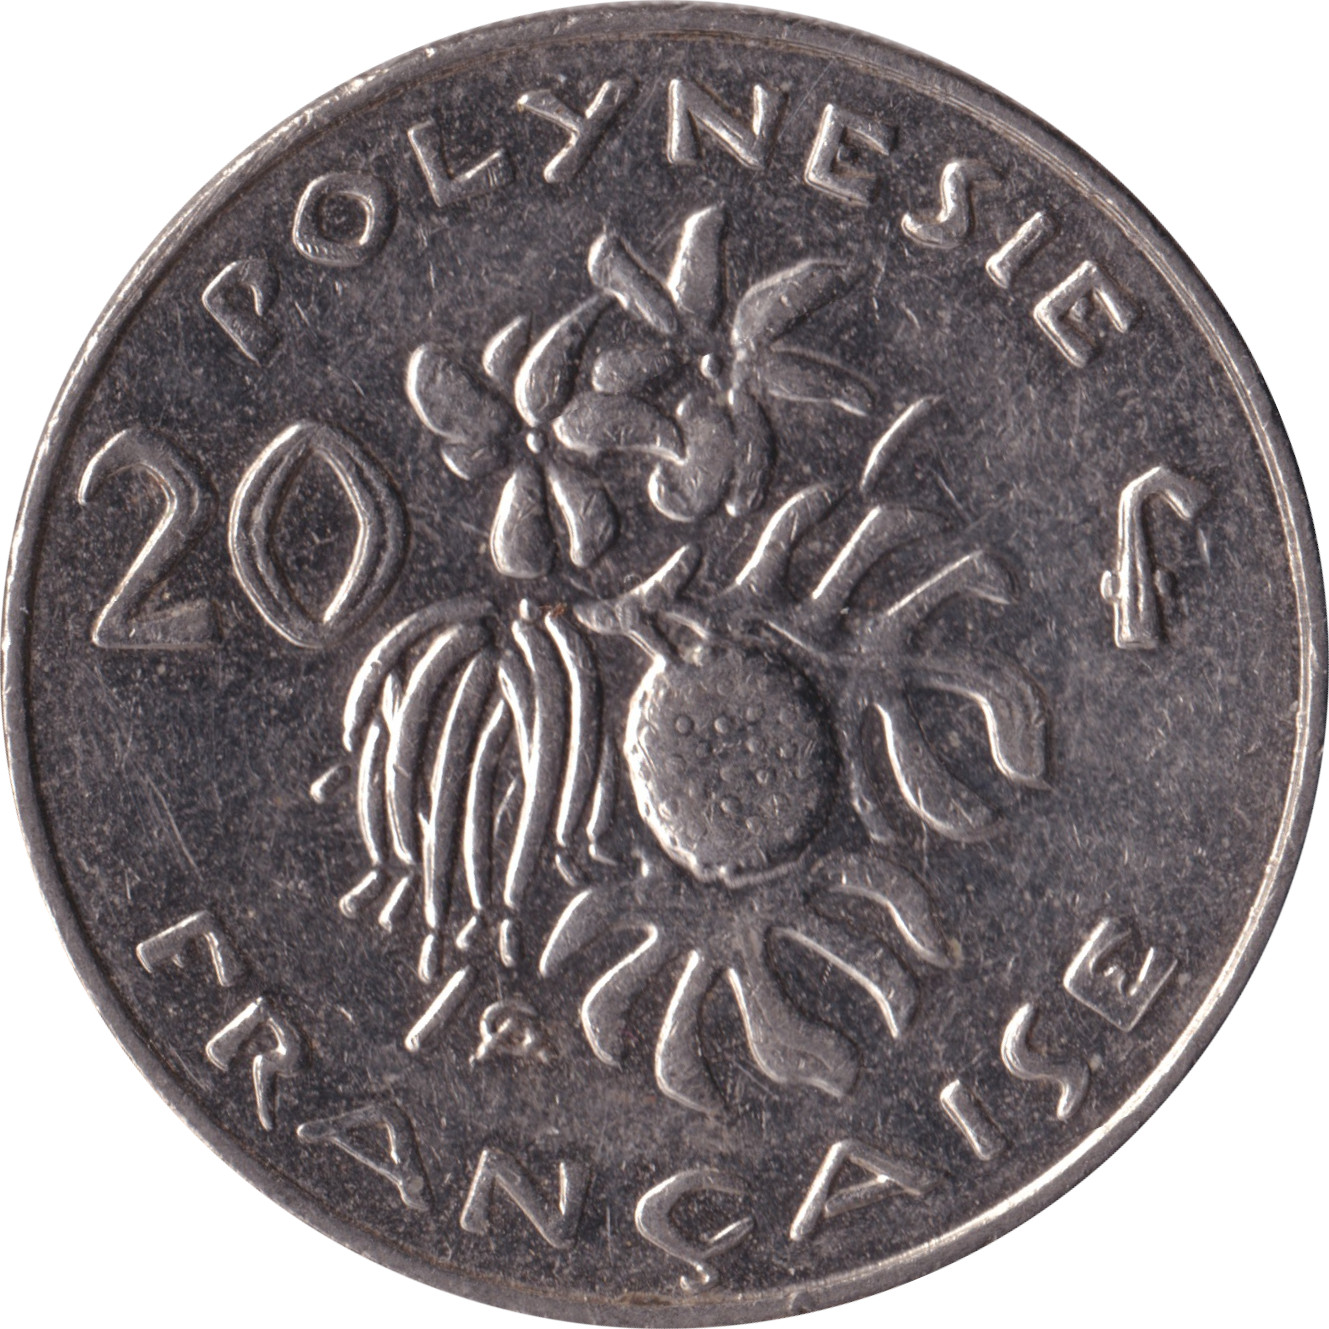 20 francs - Vanille